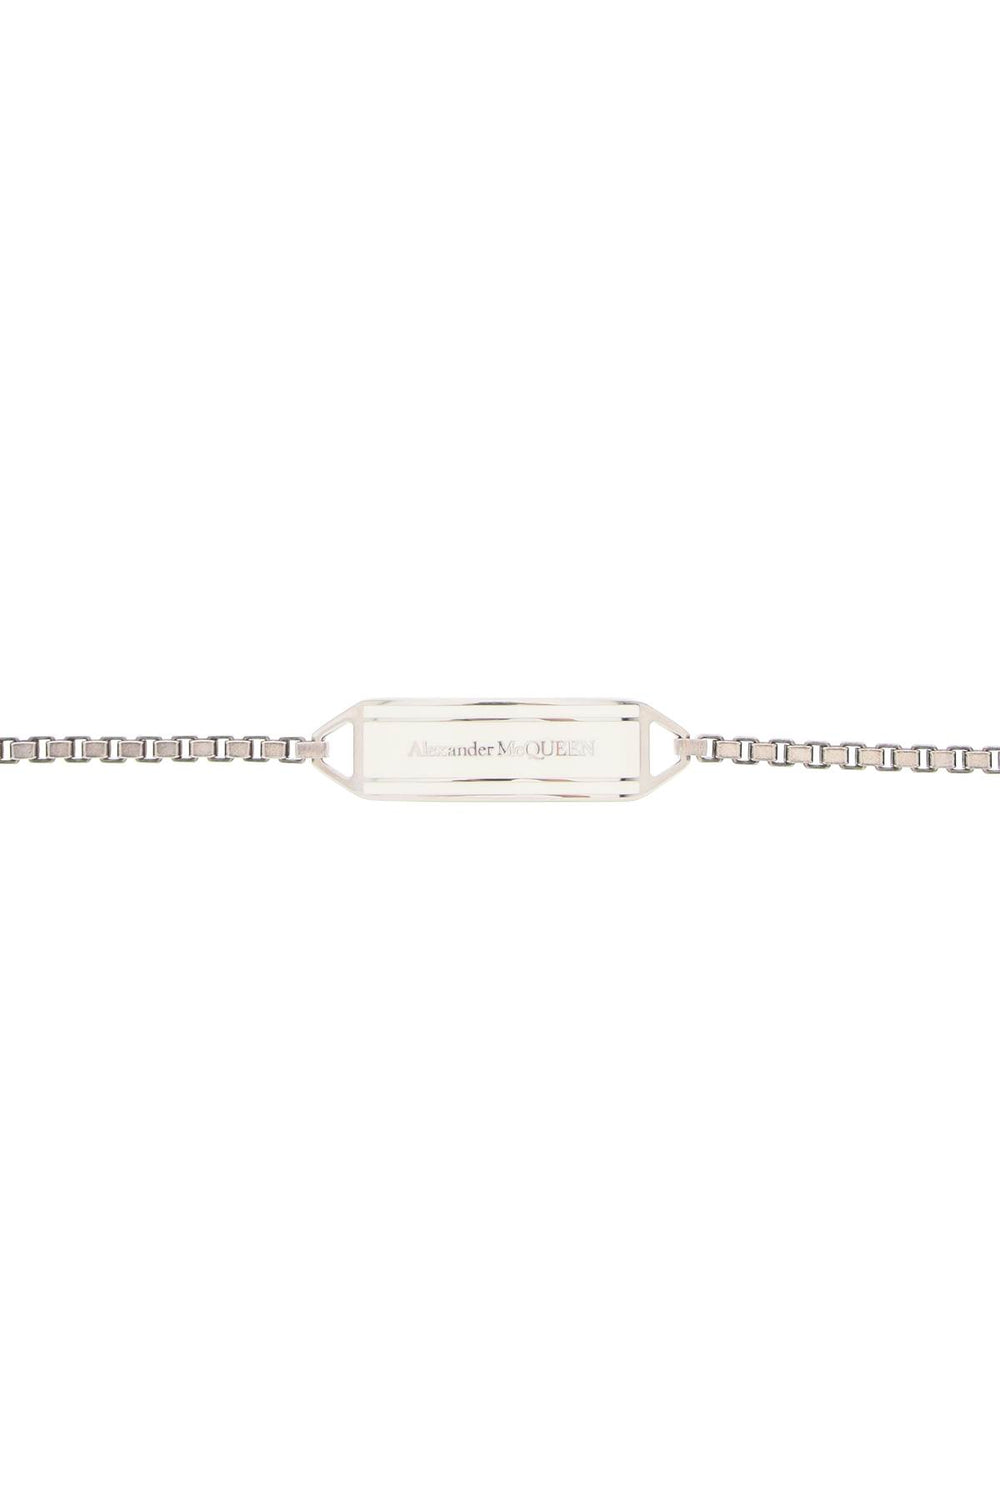 Alexander mcqueen identity chain bracelet-1